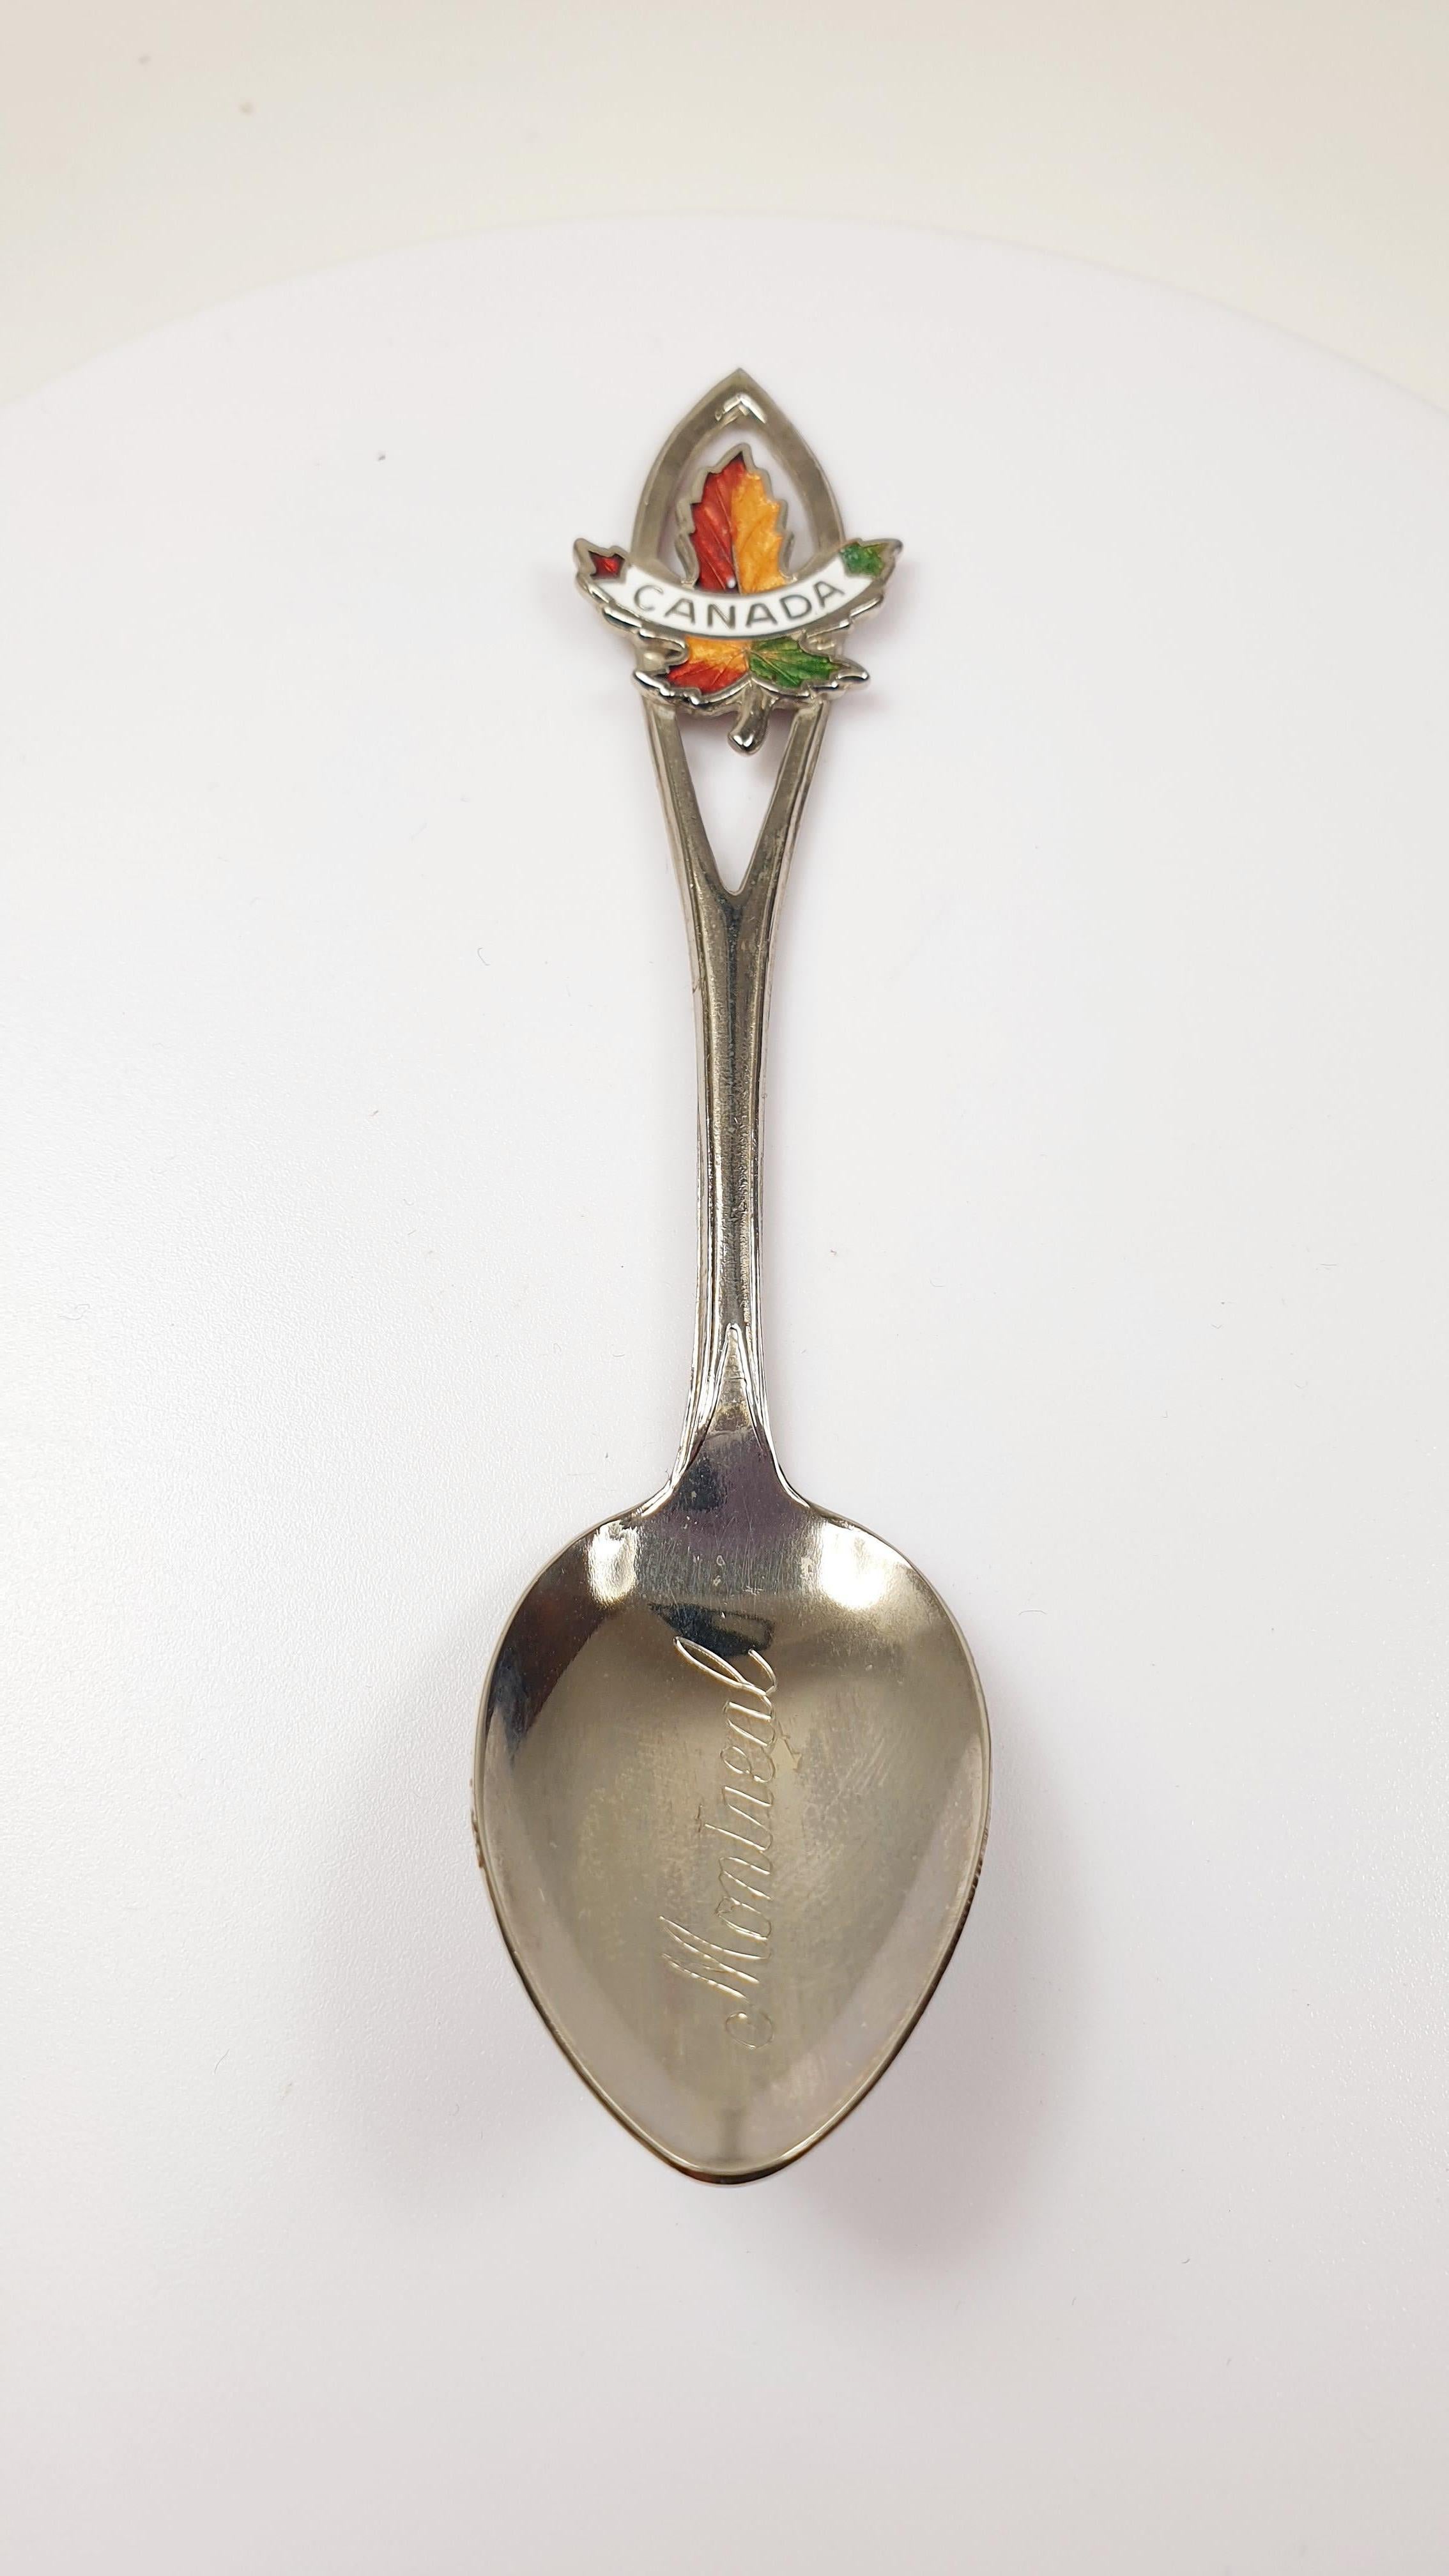 Montreal Canada collectors souvenir Silver Teaspoon  For Sale